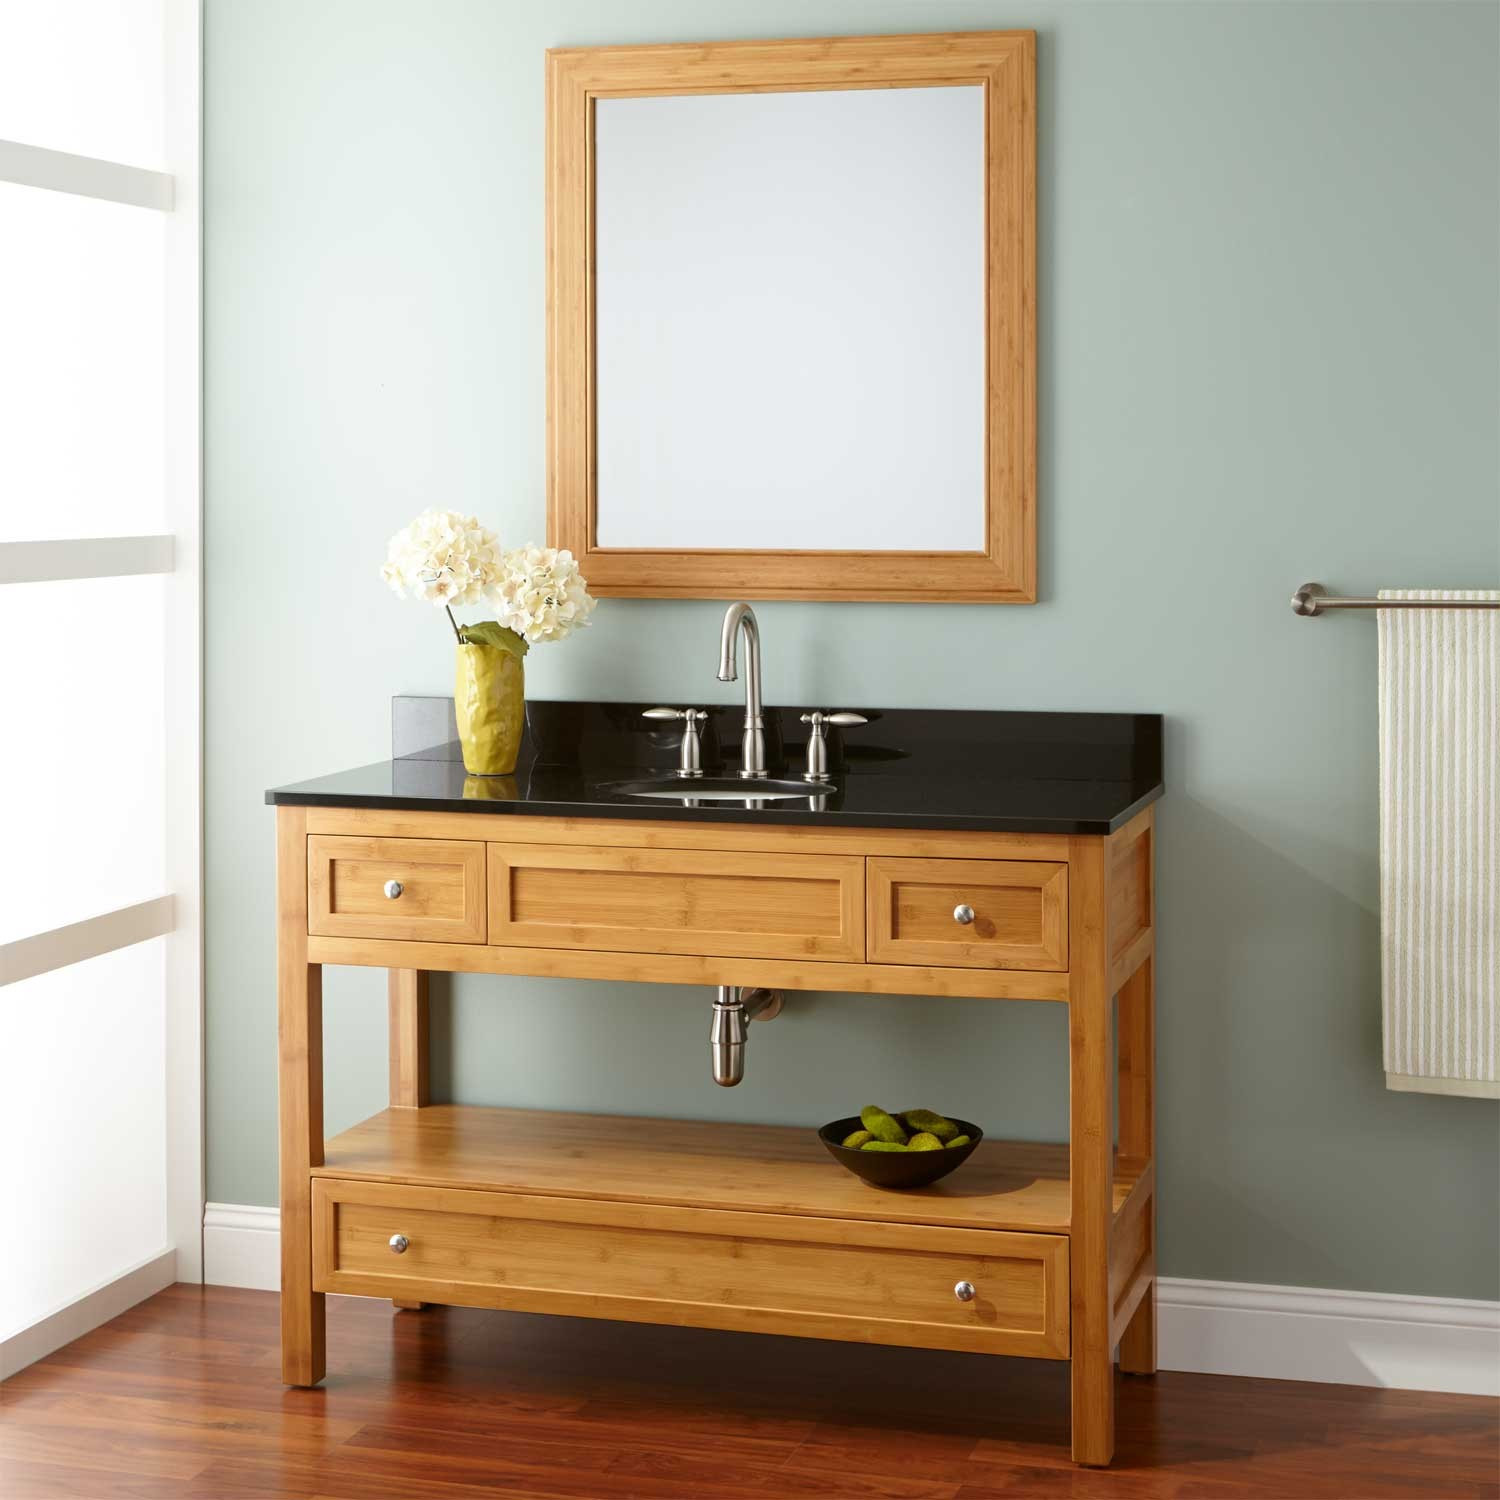 Narrow Bathroom Sinks And Vanities
 How to Renovate A Narrow Depth Bathroom Vanity